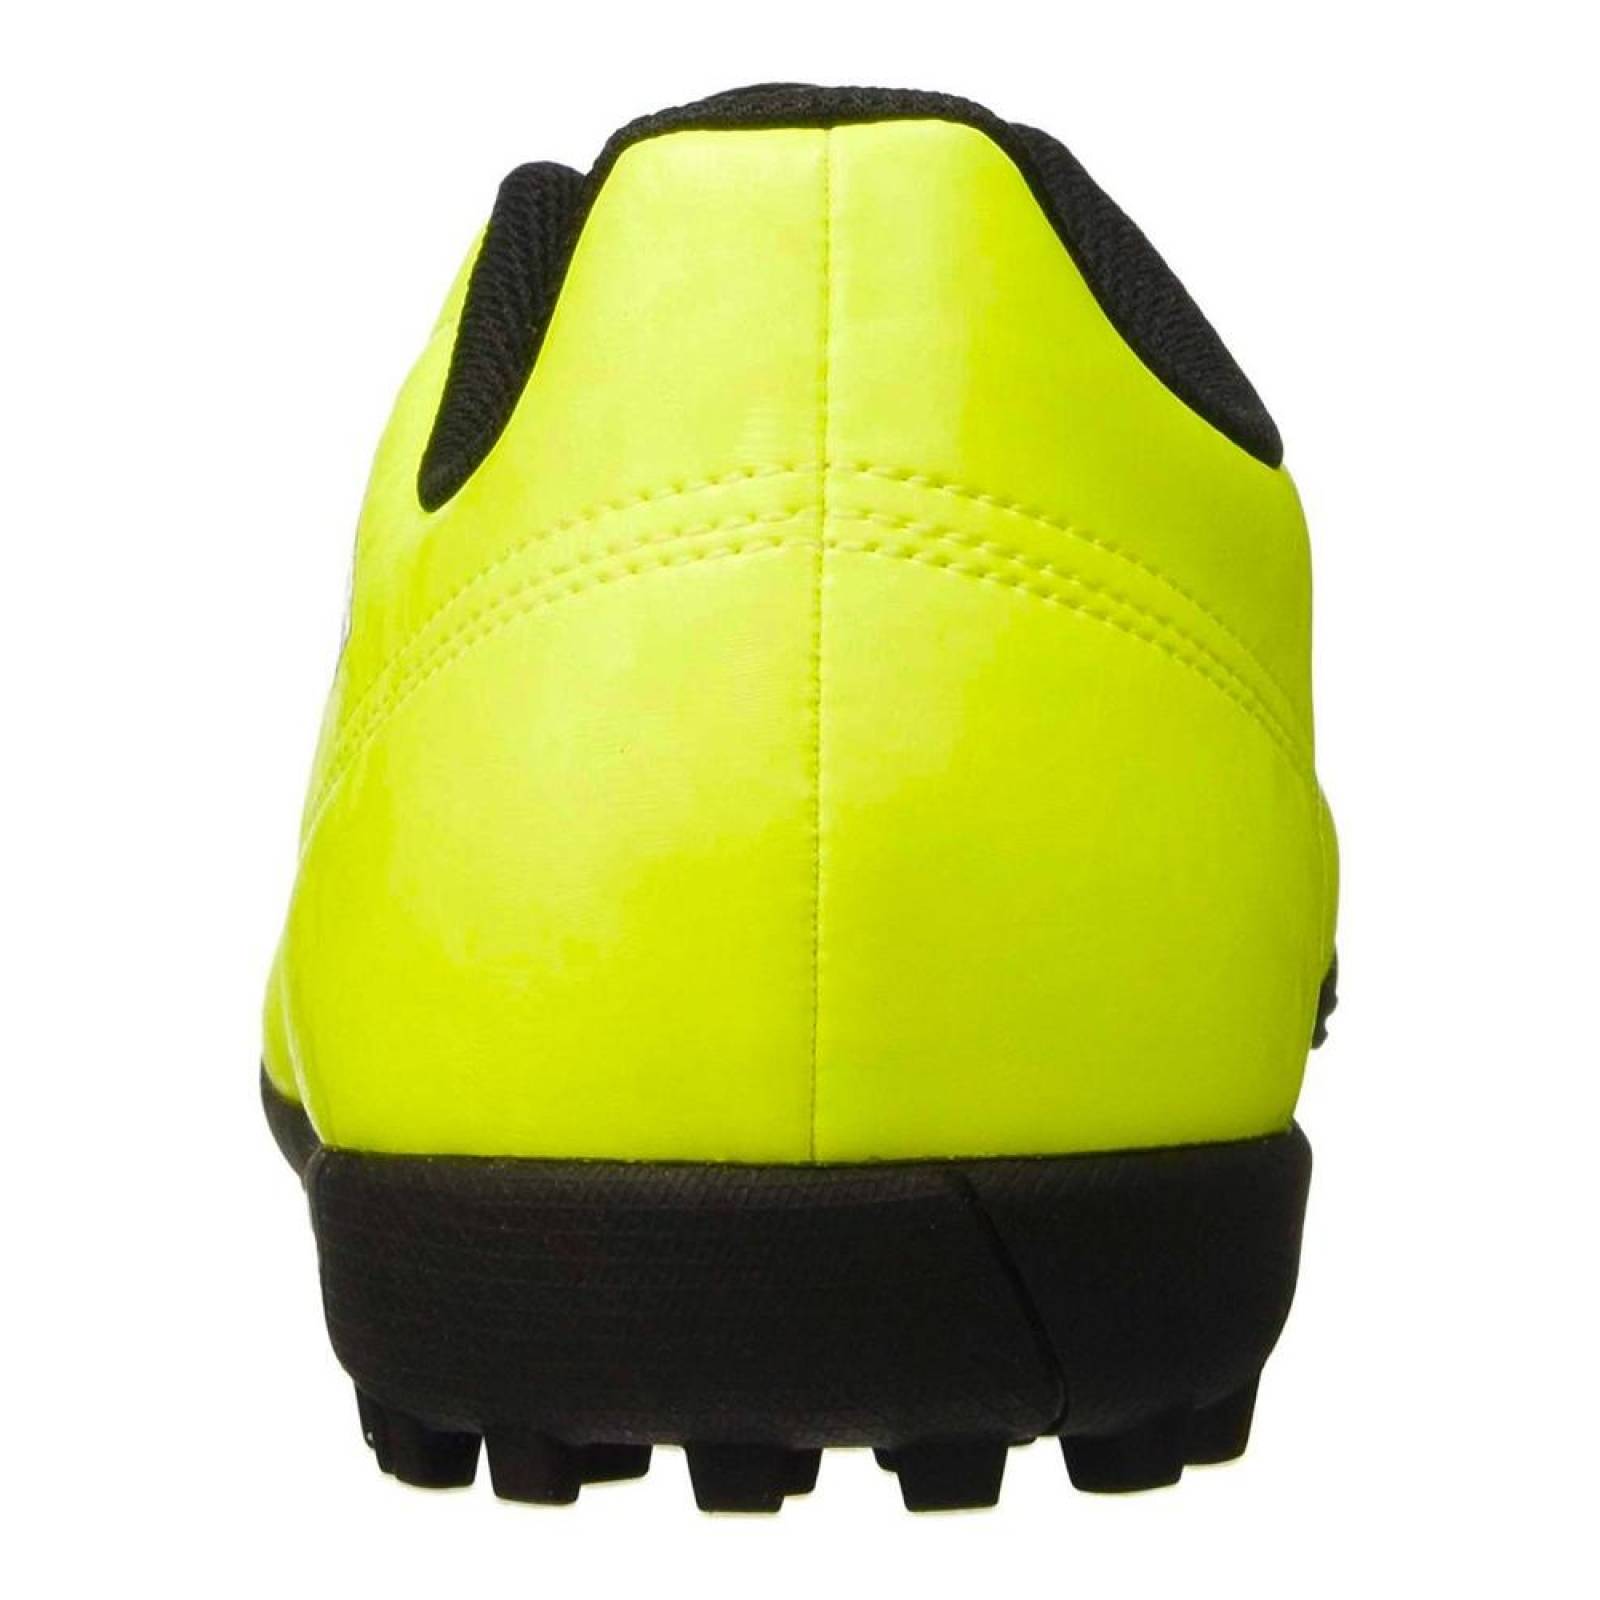 Zapatos de Futbol Pasto Sintético Adidas Conquisto AQ4330 Amarillo Hombre 